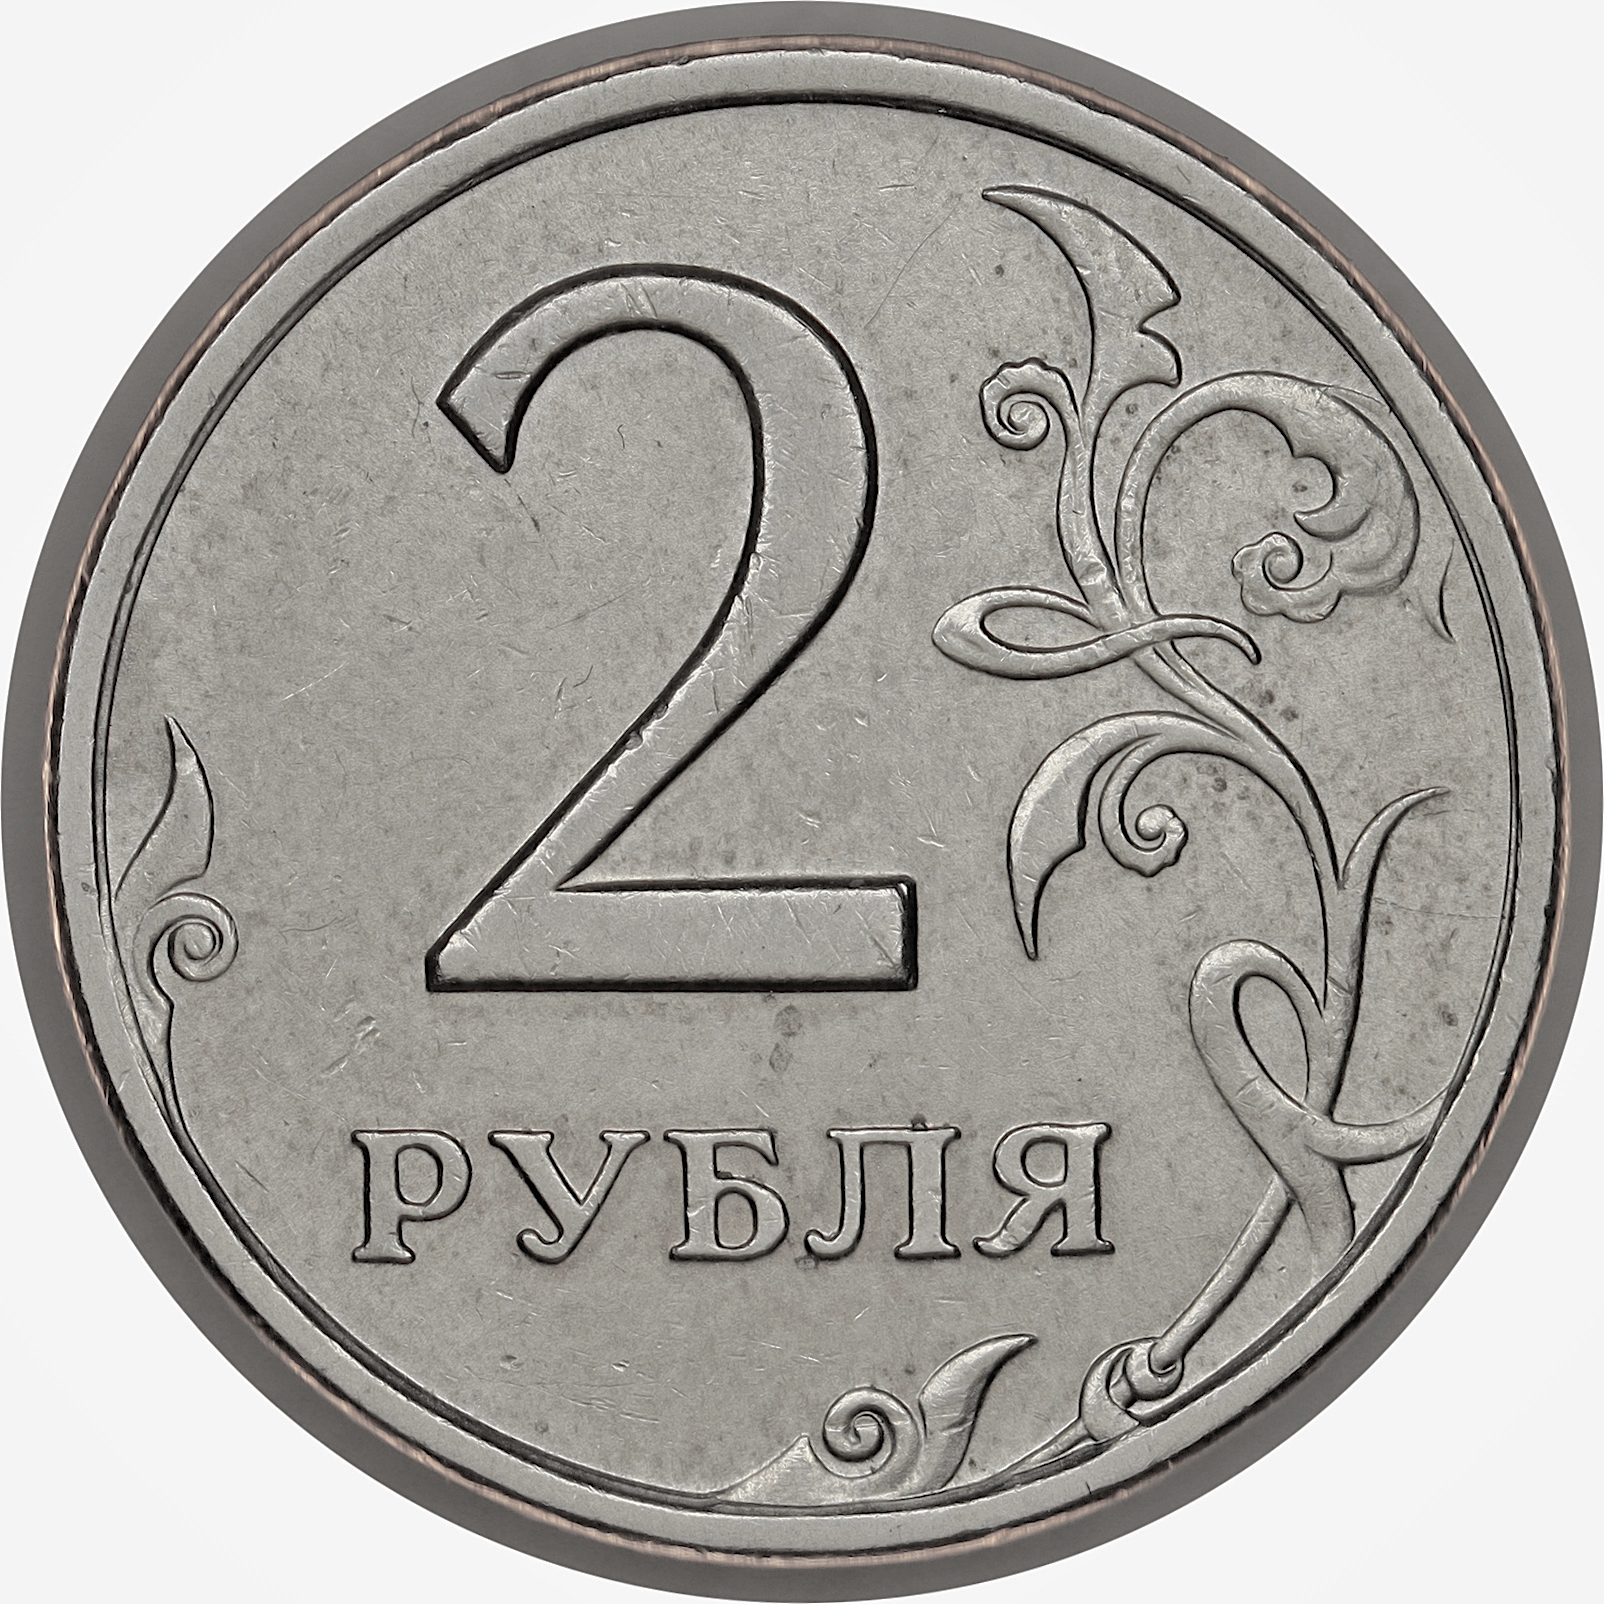 2 рубля реверс шт.1.41 -2